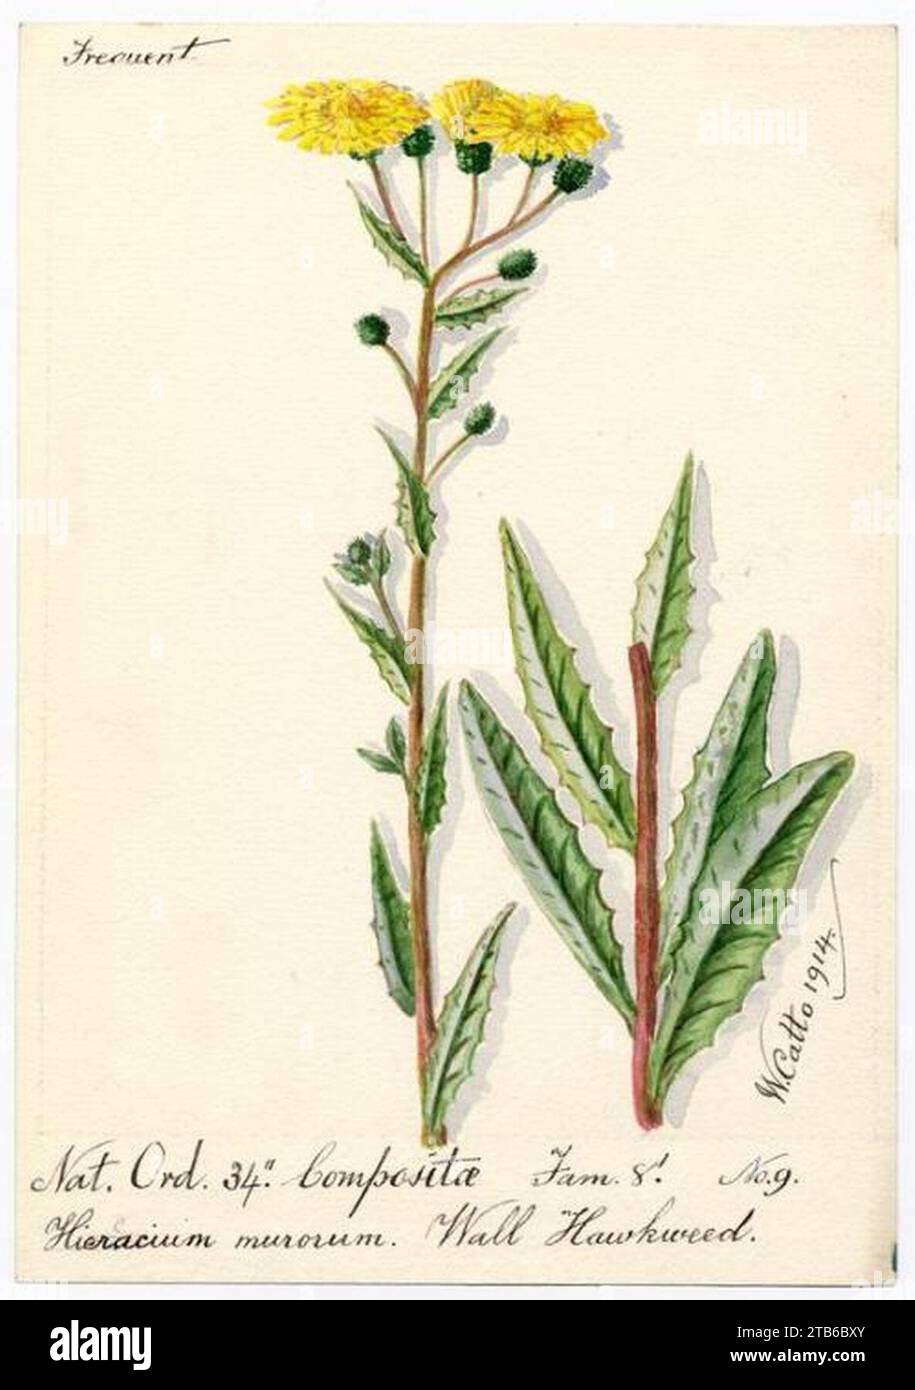 Wall Hawkweed (Hieracium murorum) - William Catto - ABDAG016154. Stock Photo